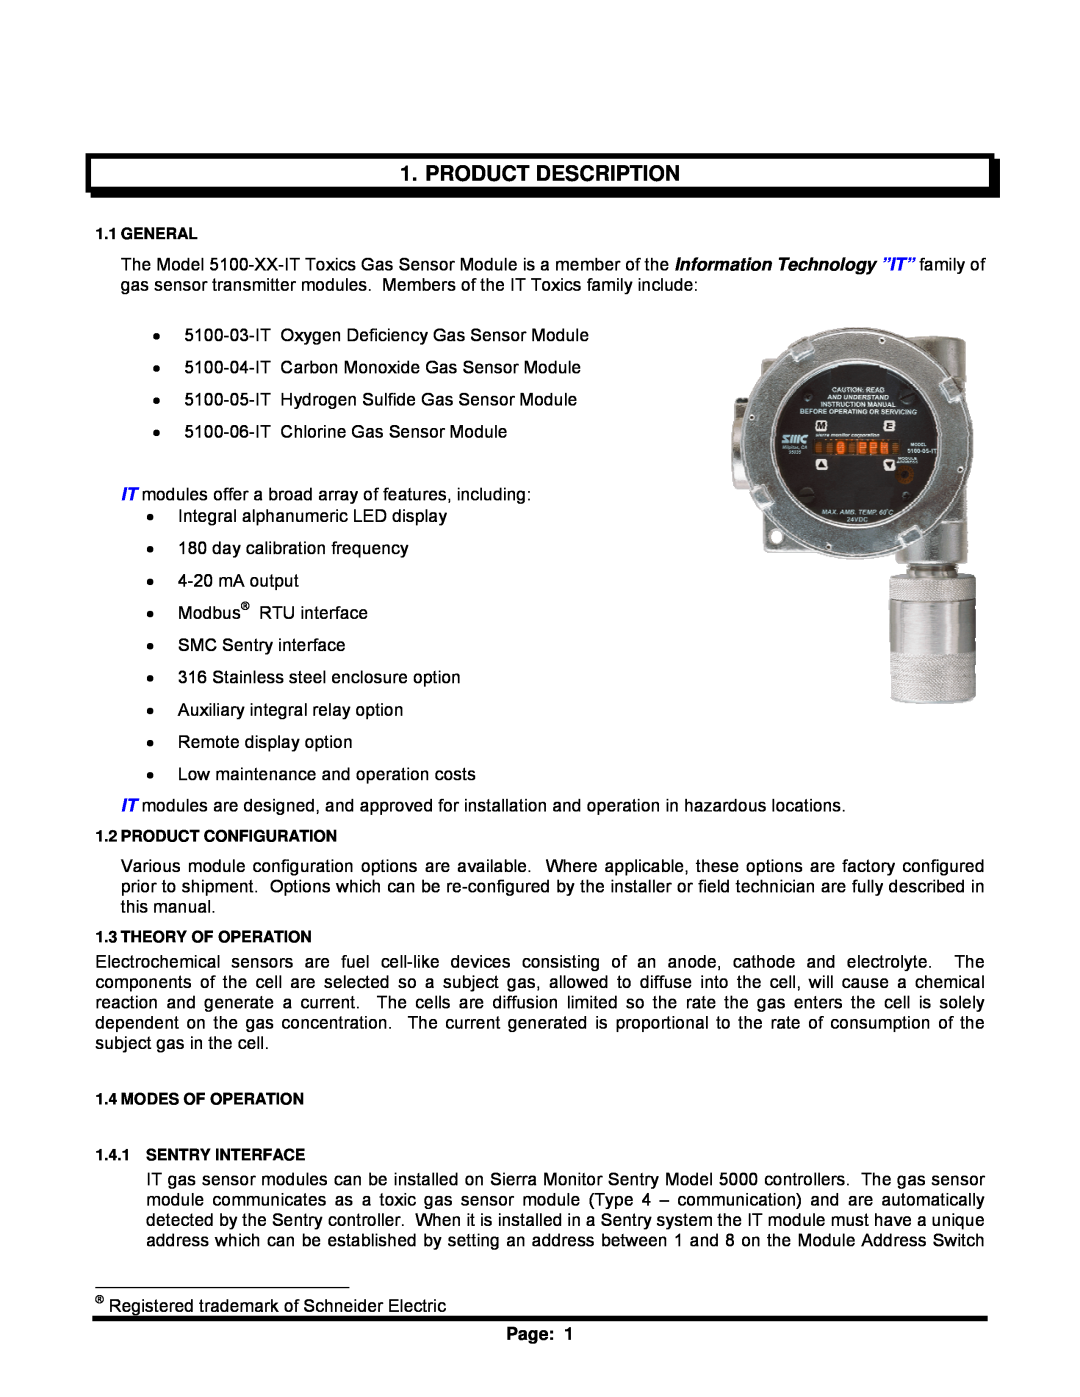 Sierra Monitor Corporation T12020, 5100-06-IT, 5100-05-IT, 5100-04-IT, 5100-03-IT instruction manual Product Description, Page 